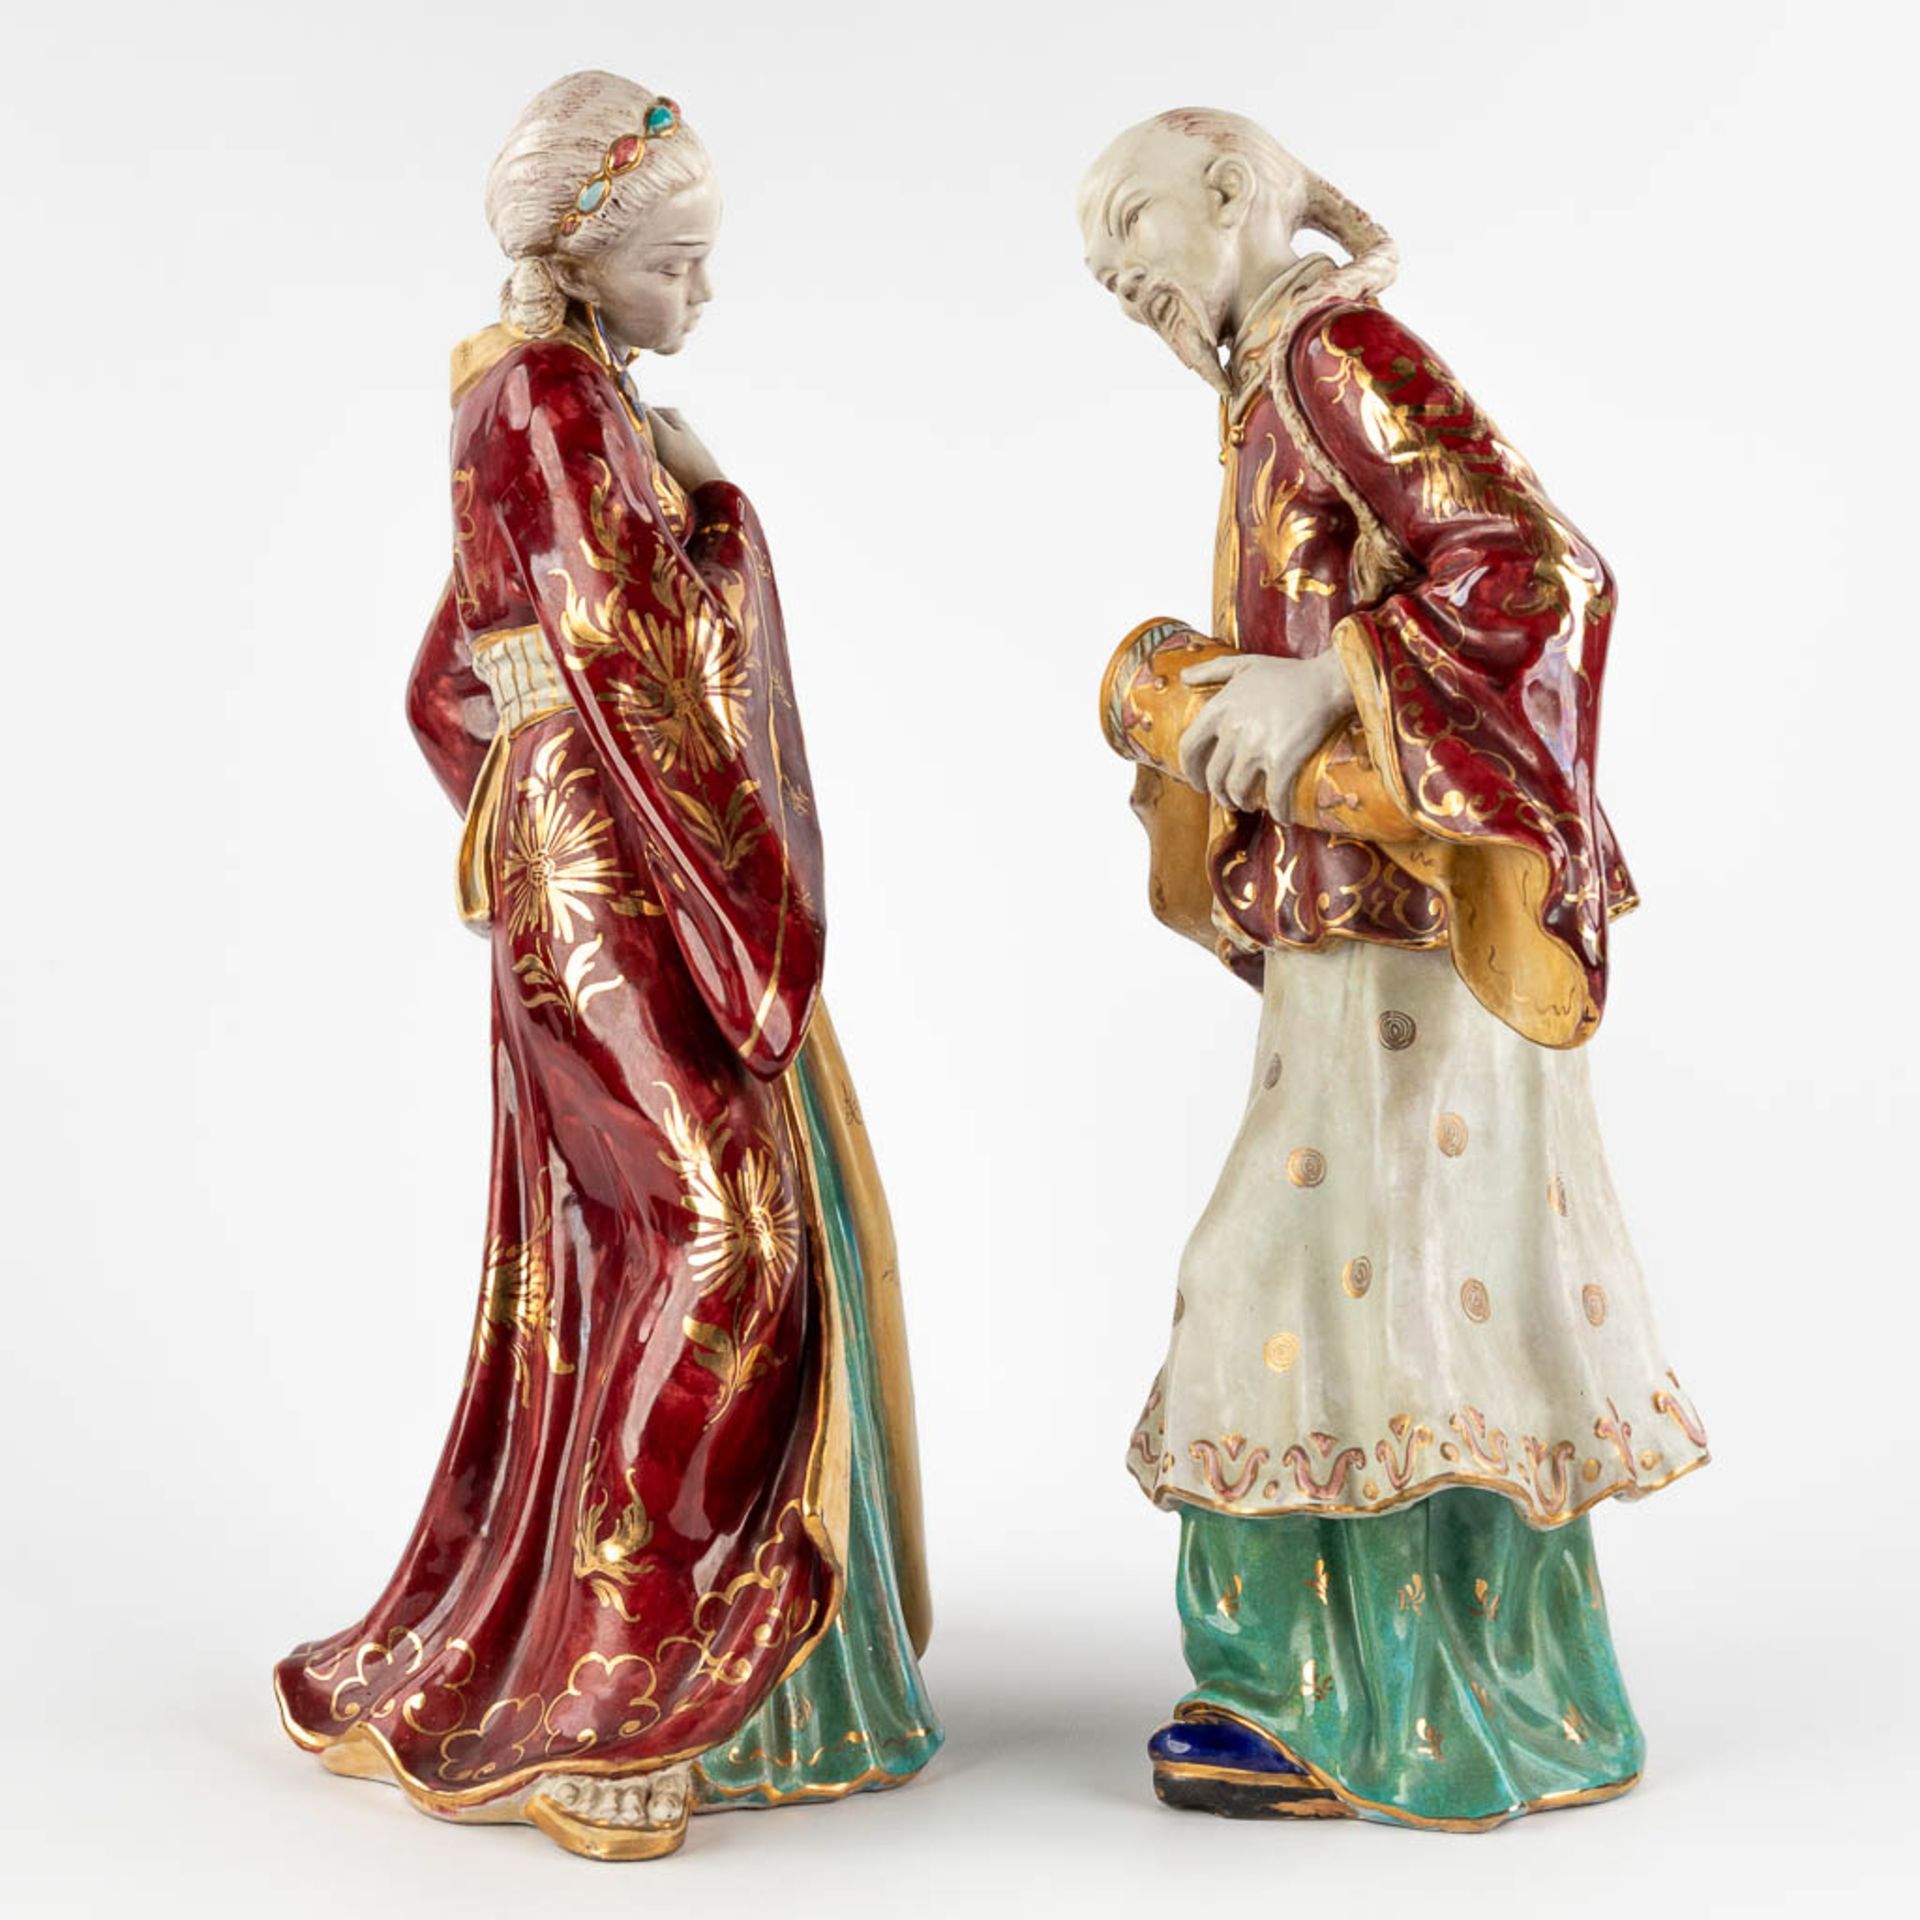 Eugenio PATTARINO (1885-1971) 'Asian Figurines' glazed terracotta. (D:18 x W:24 x H:46 cm) - Image 6 of 14